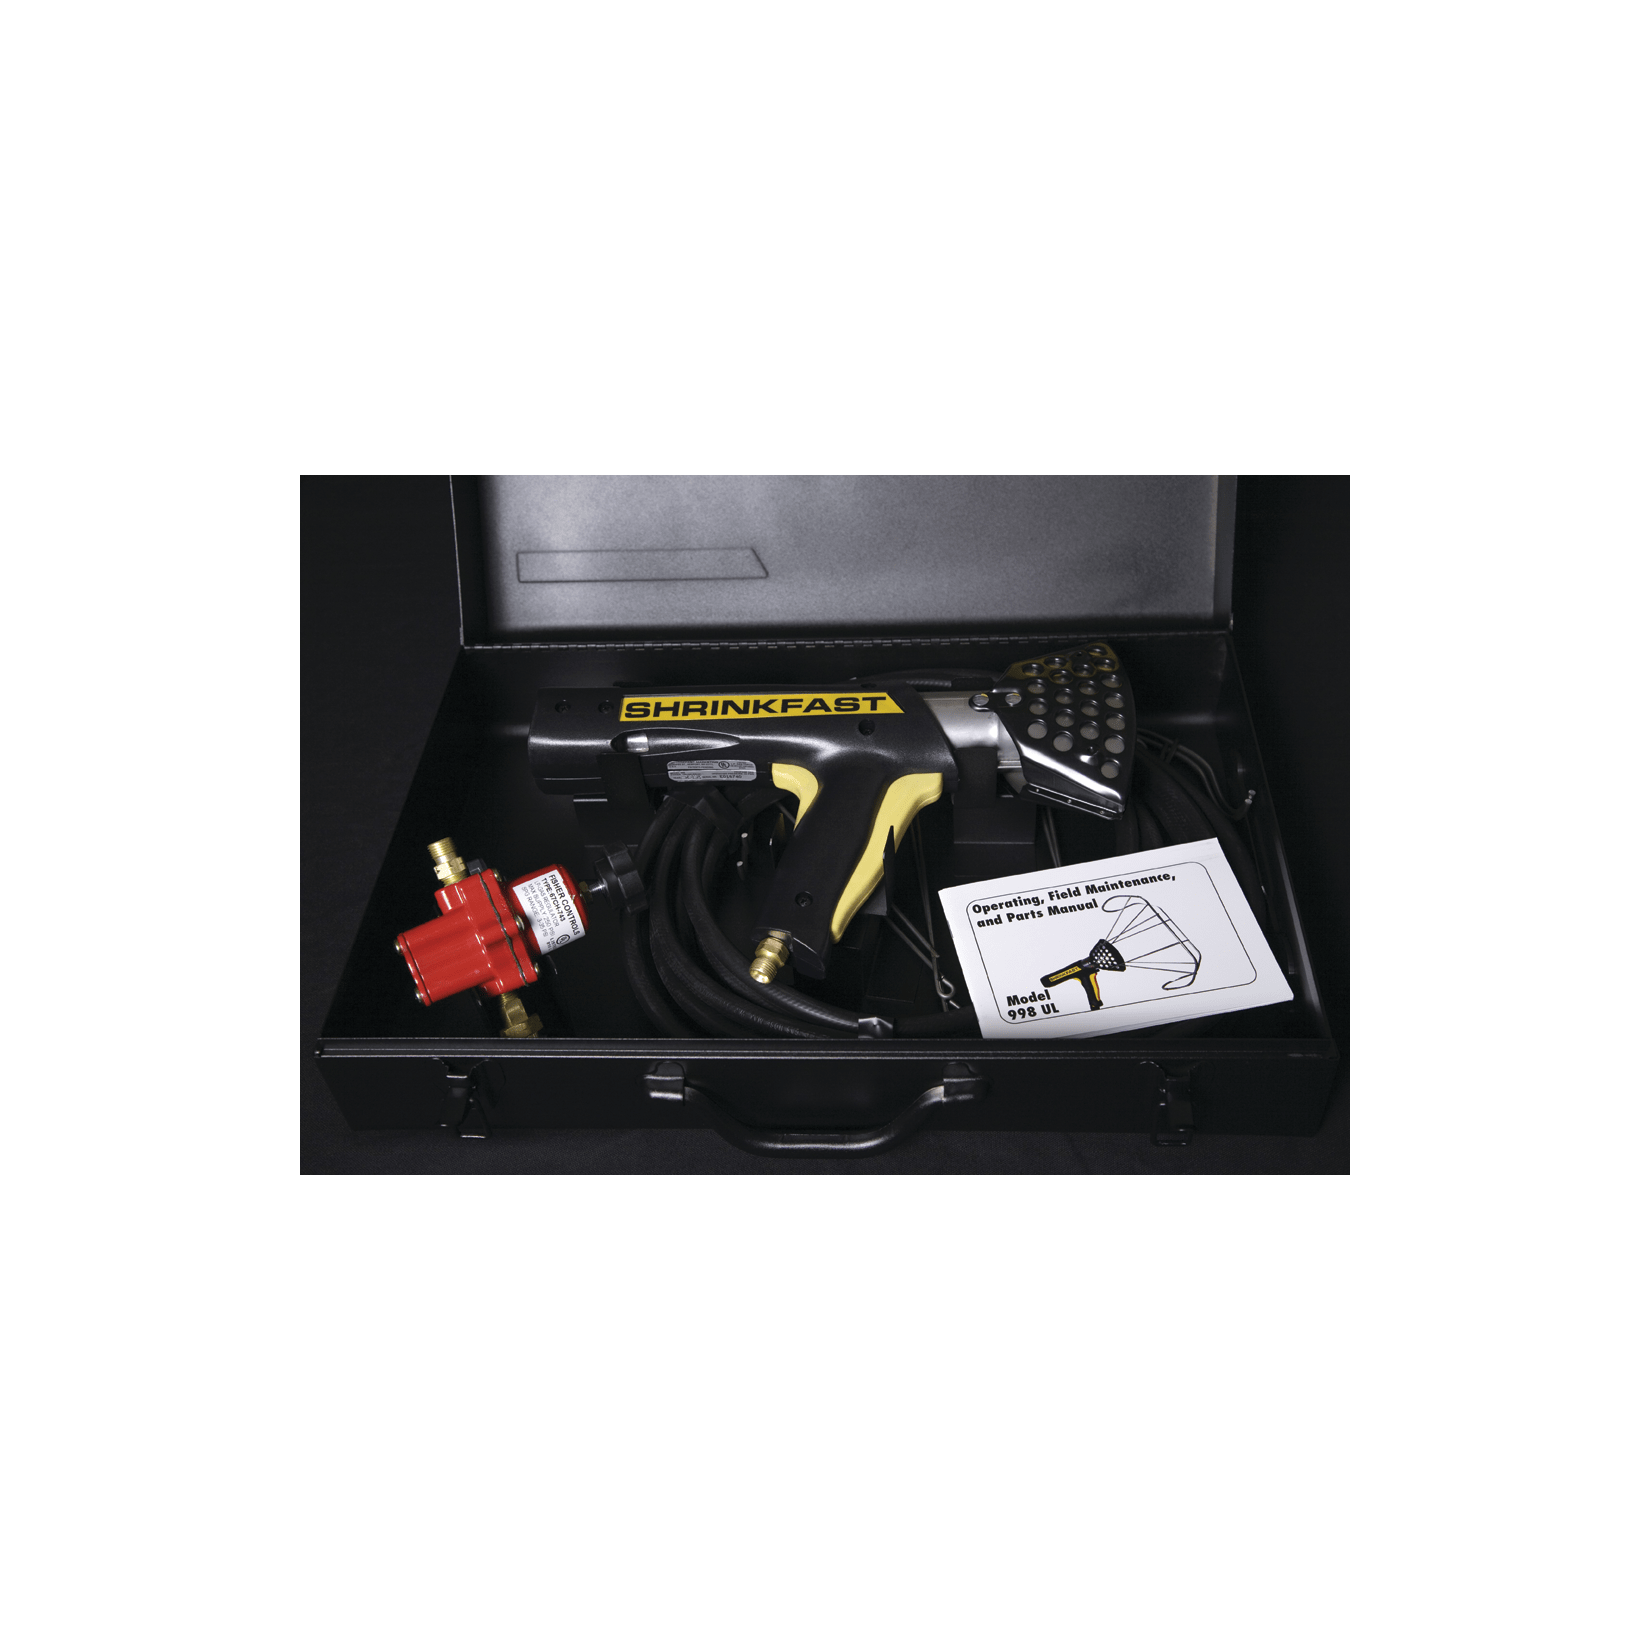 Heat Shrink Gun Shrinkfast Heat Shrink Gun Kit Model 998